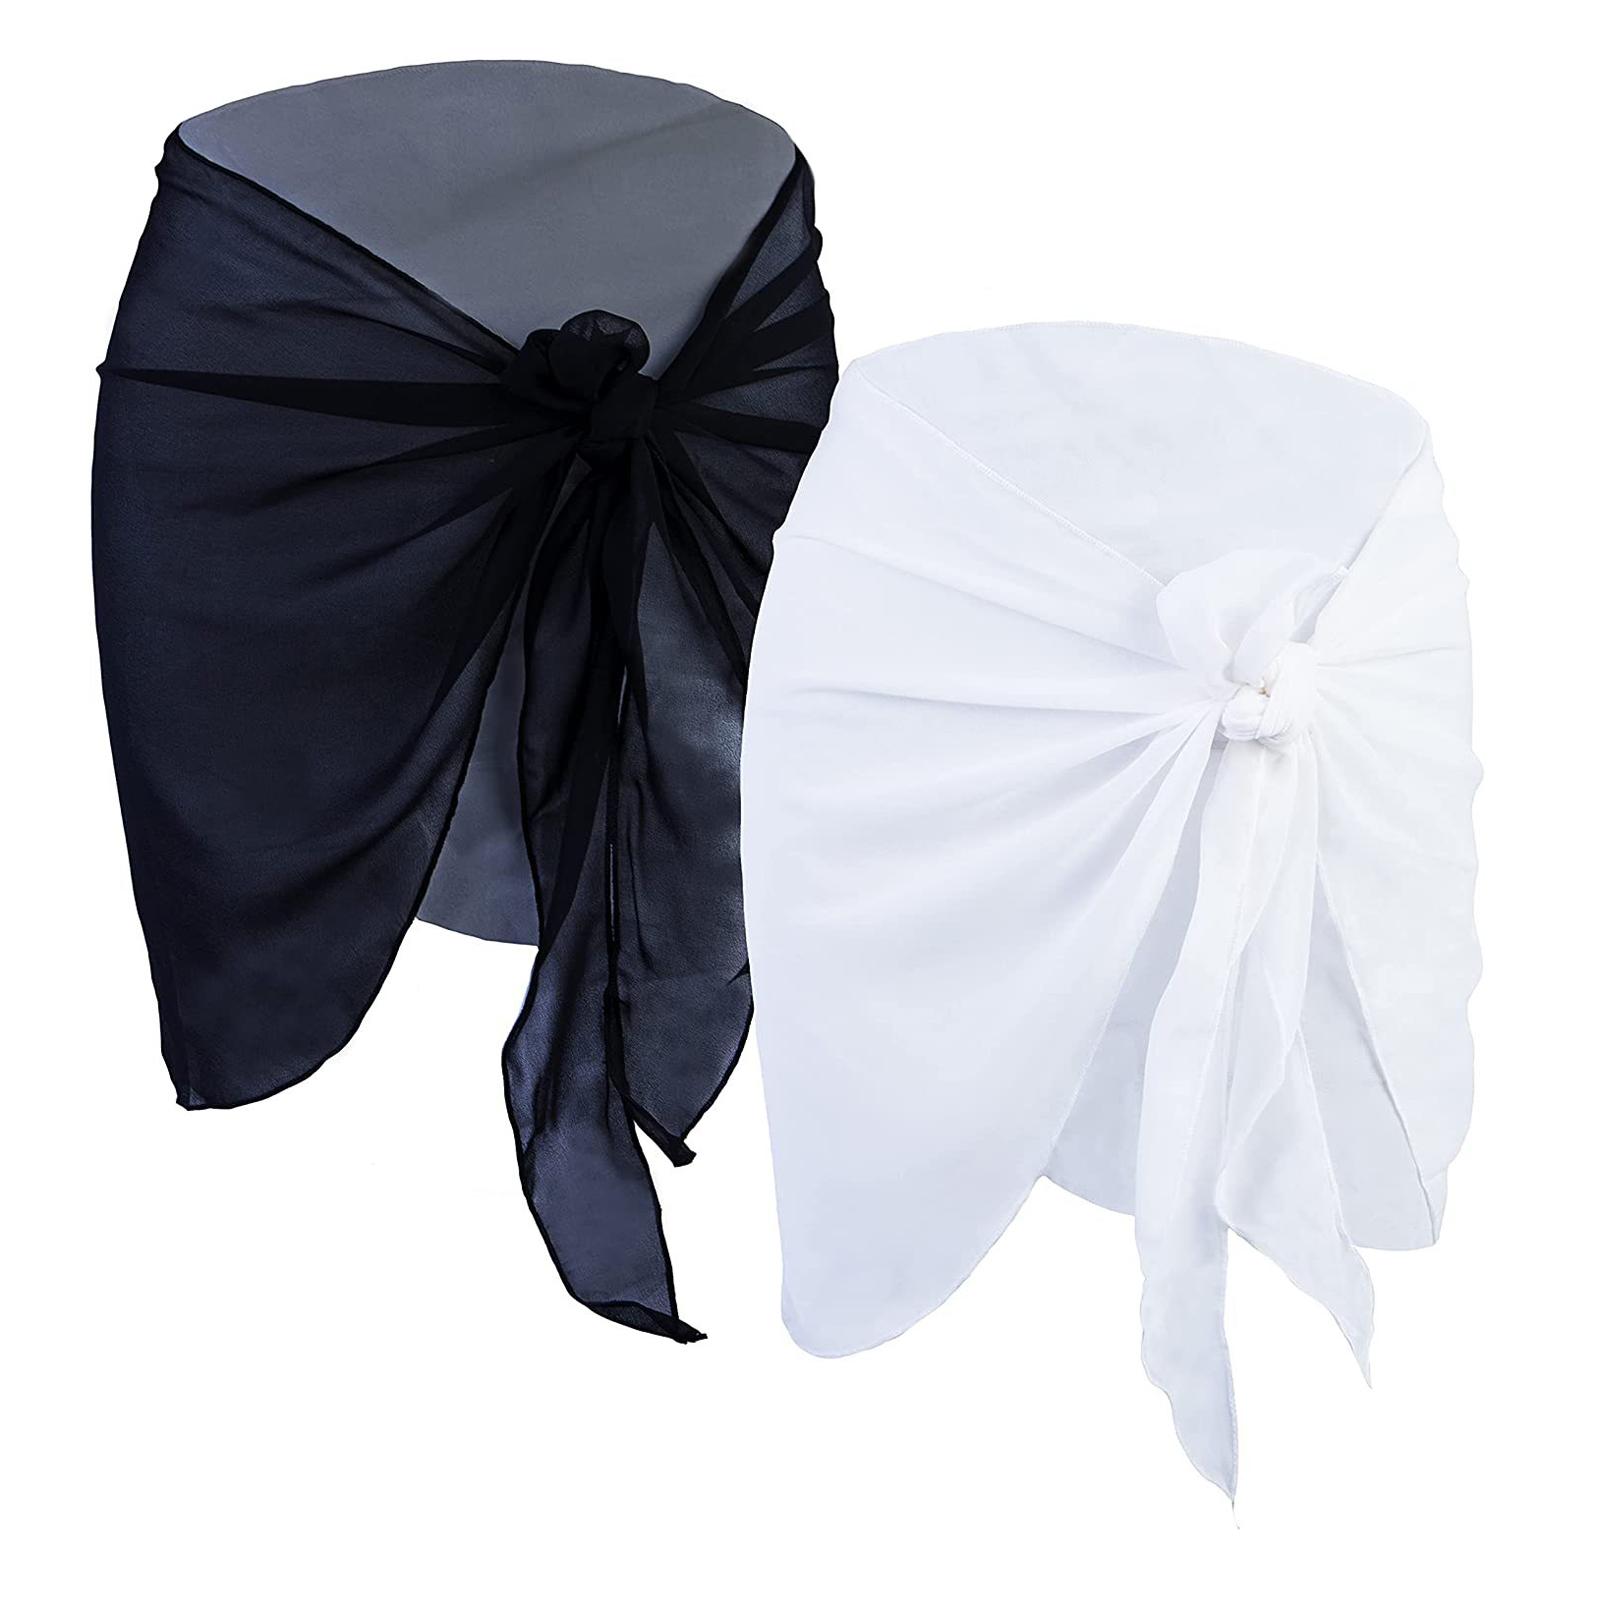 Chiffon Cover Up Solid Women's Summer Bathing Suit Bottom Short Skirt 50cmx180cm Black